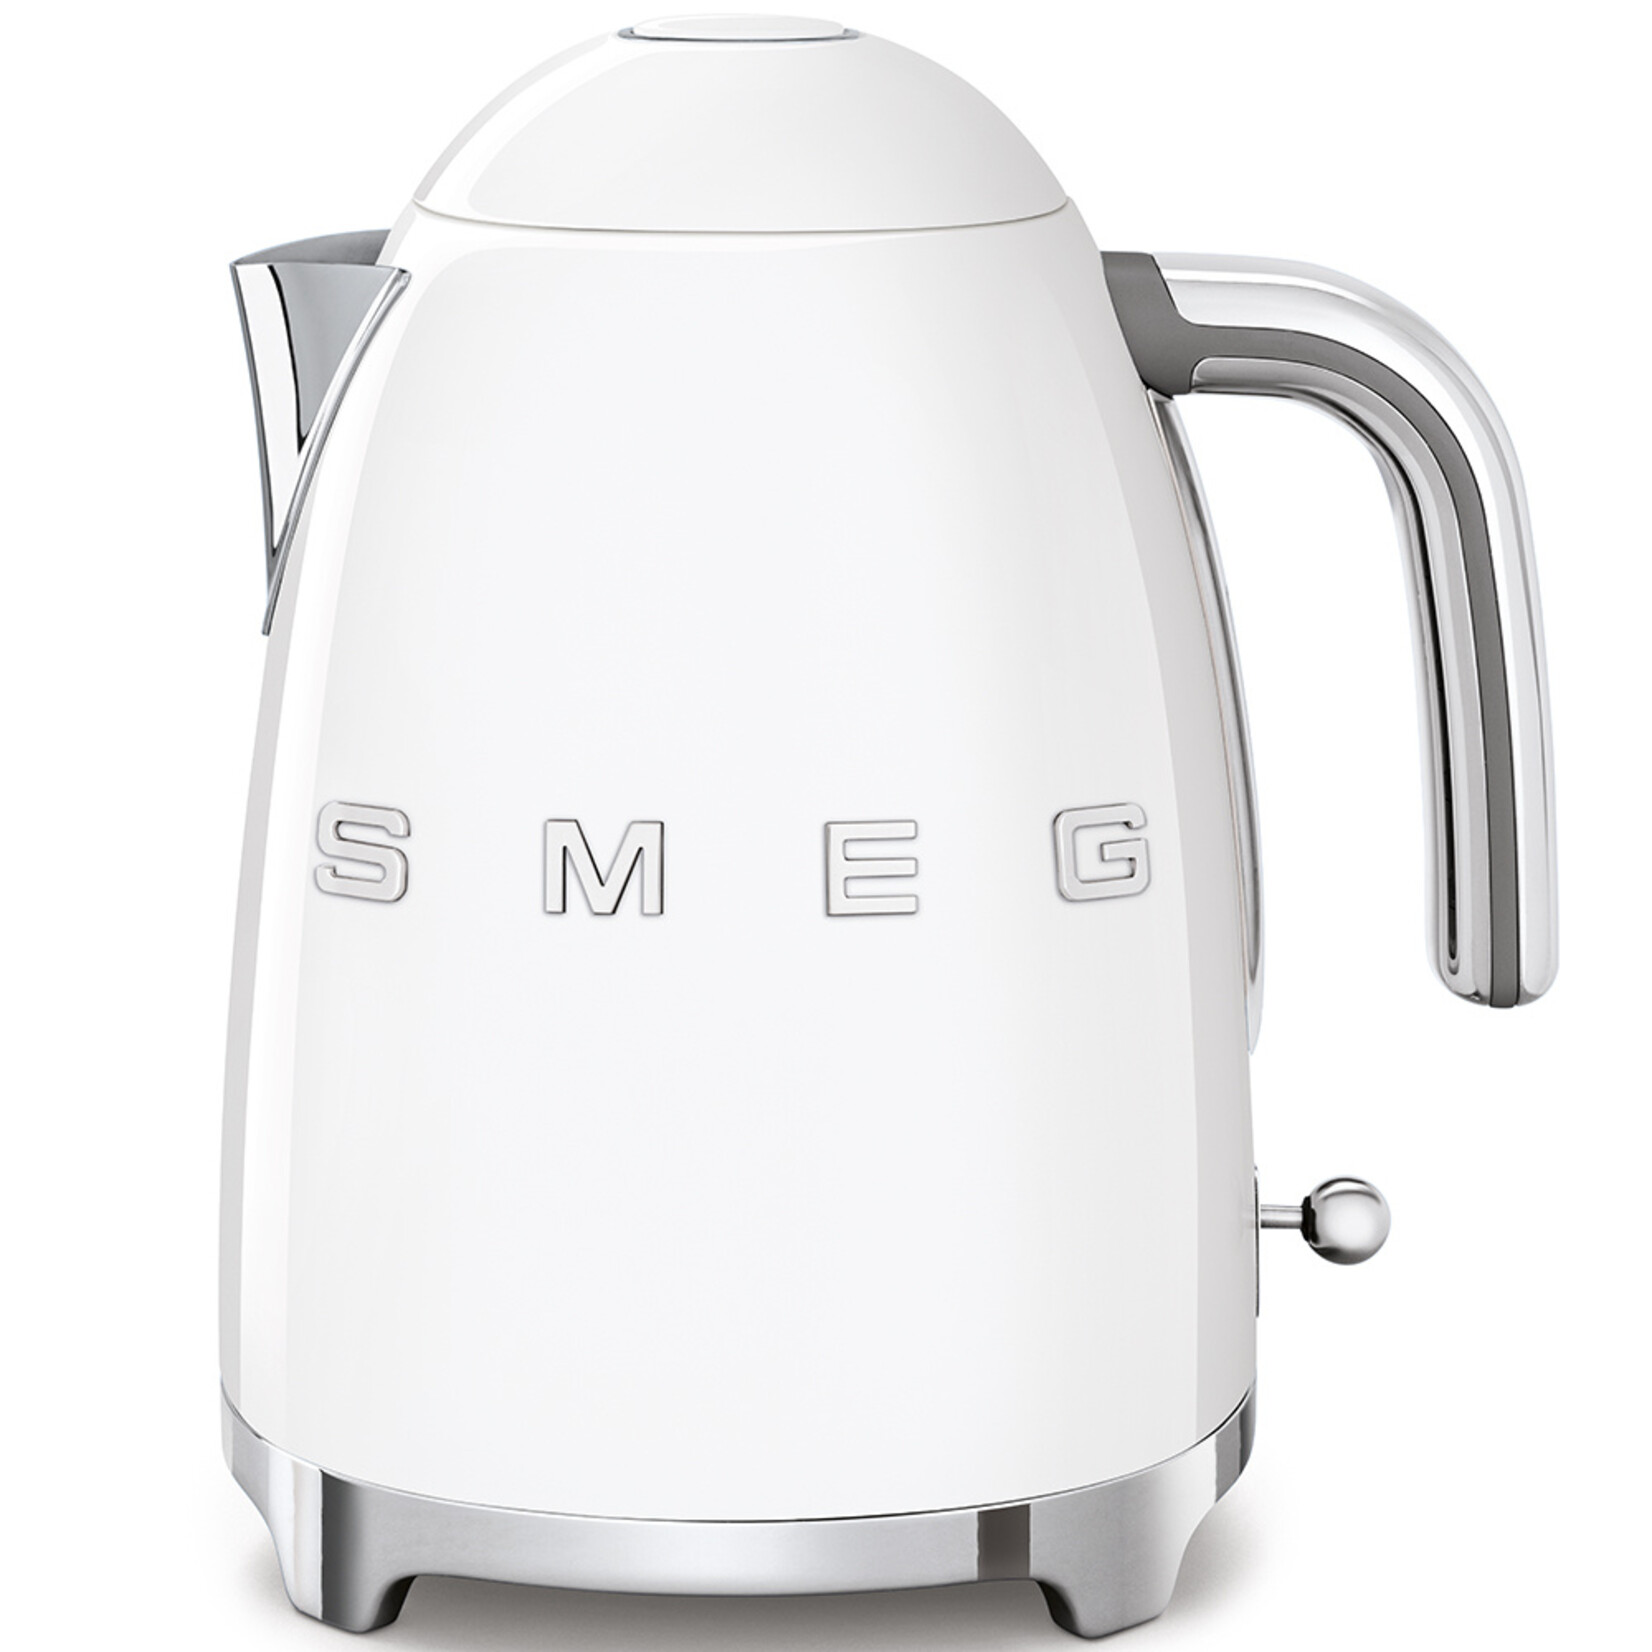 https://cdn.shoplightspeed.com/shops/659299/files/51862631/1652x1652x2/smeg-50s-retro-style-aesthetic-7-cup-kettle.jpg